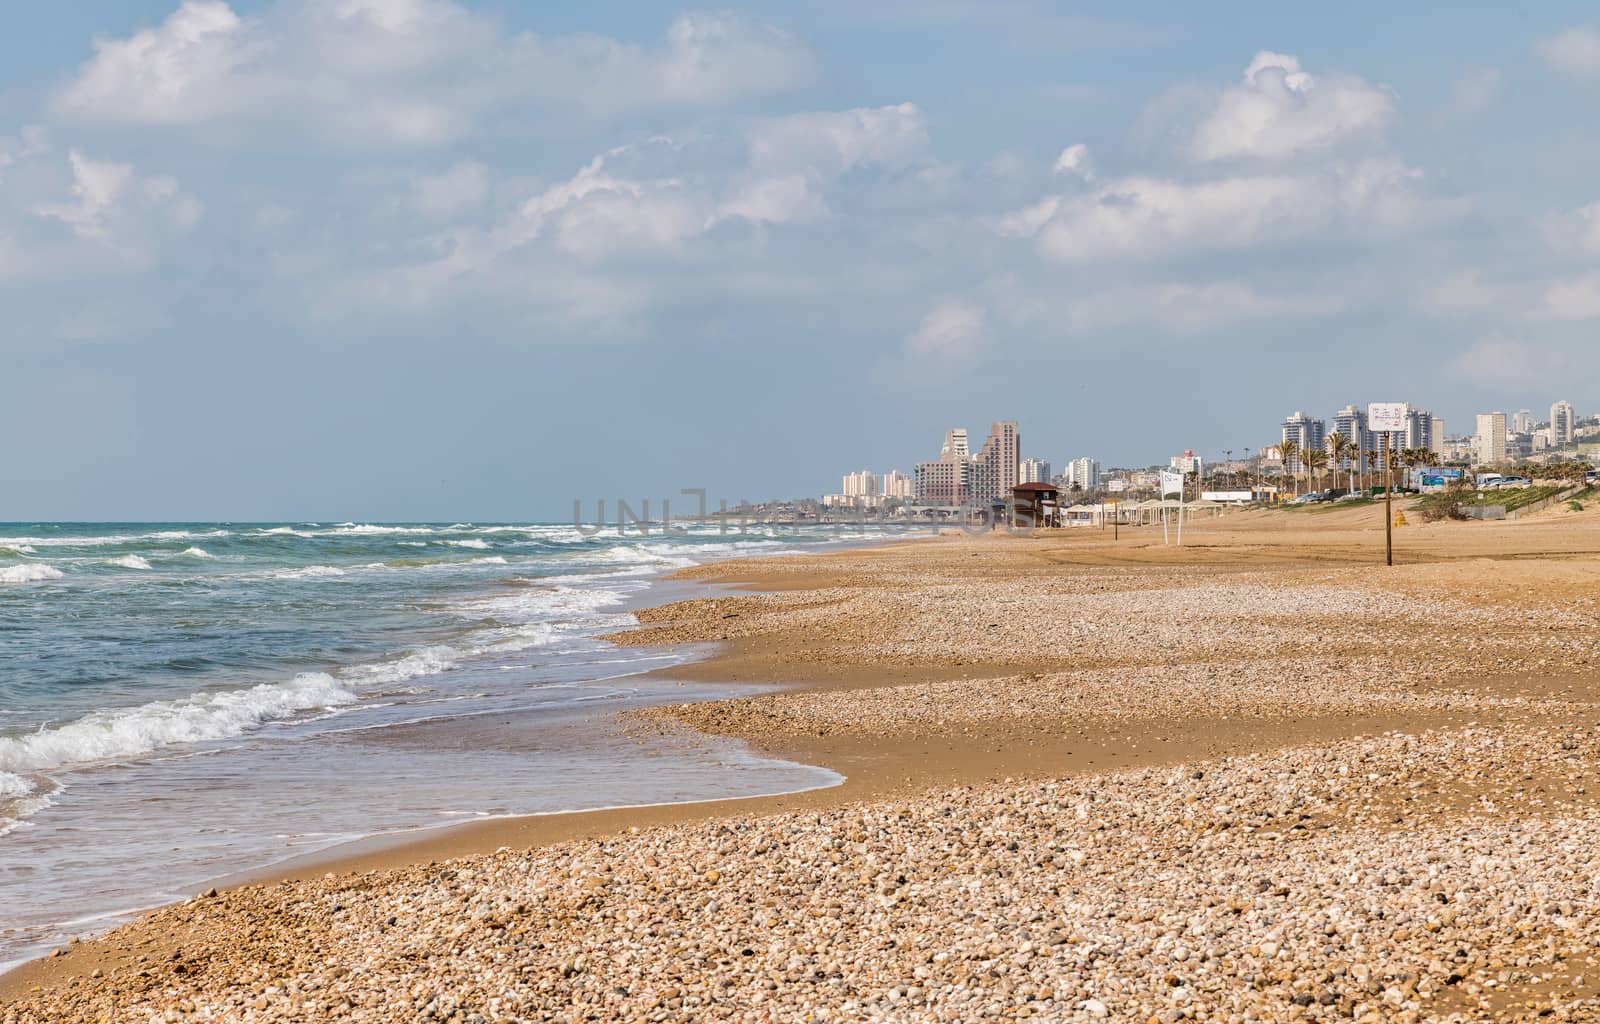 the haifa beach in israel  by compuinfoto